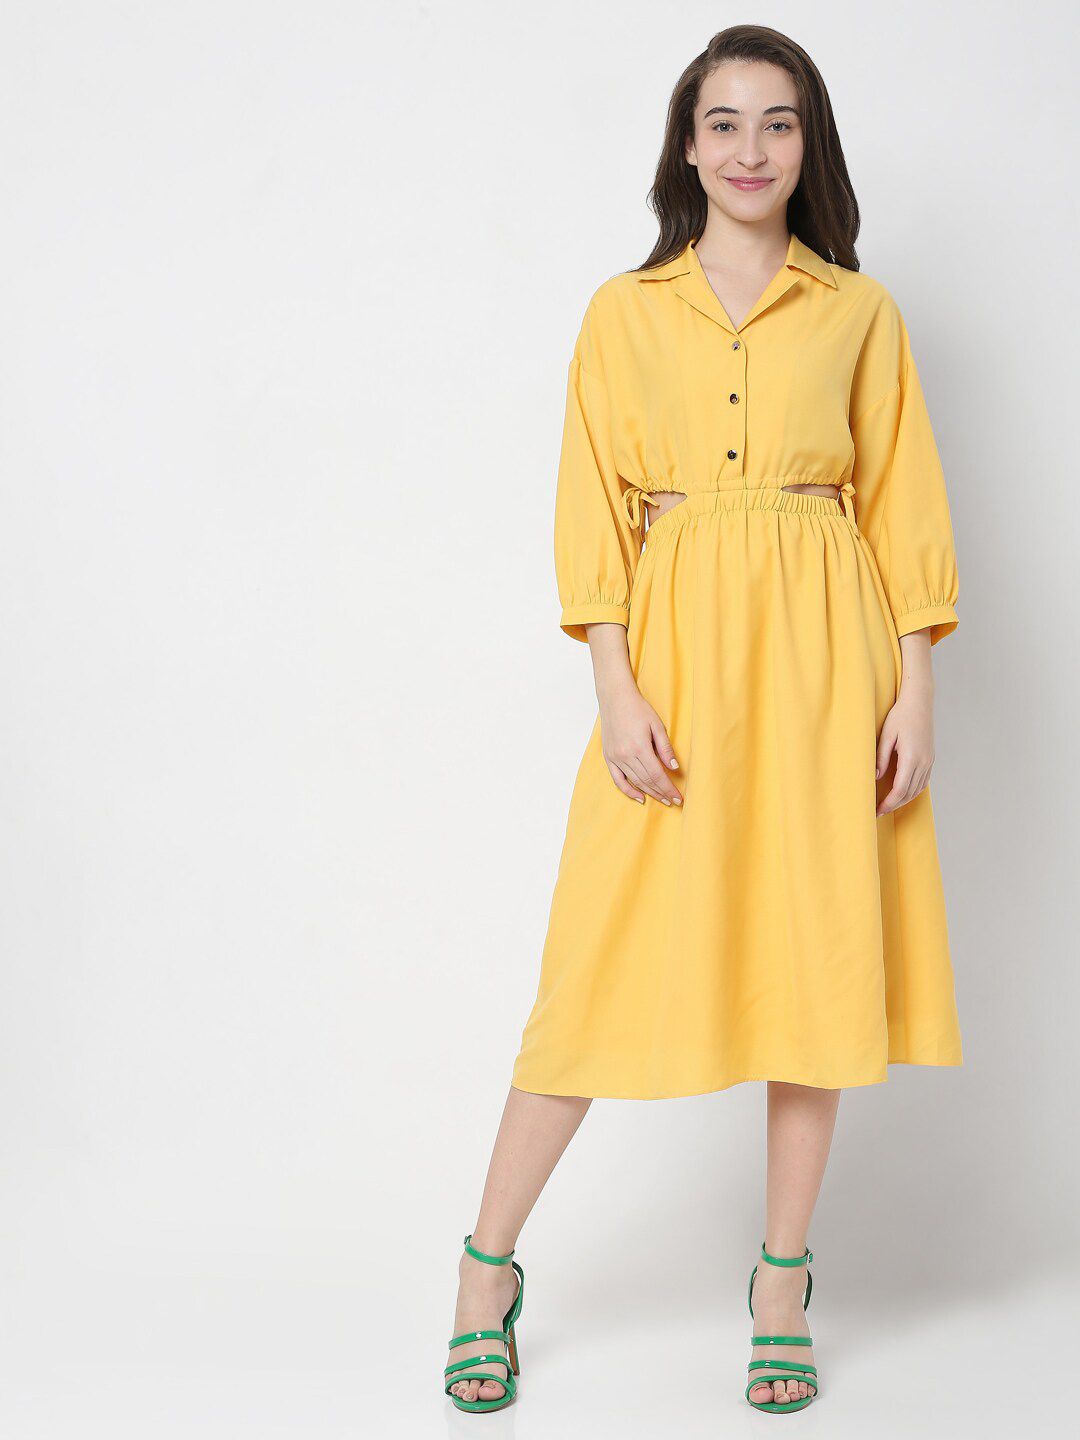 Vero Moda Yellow Dress Price in India